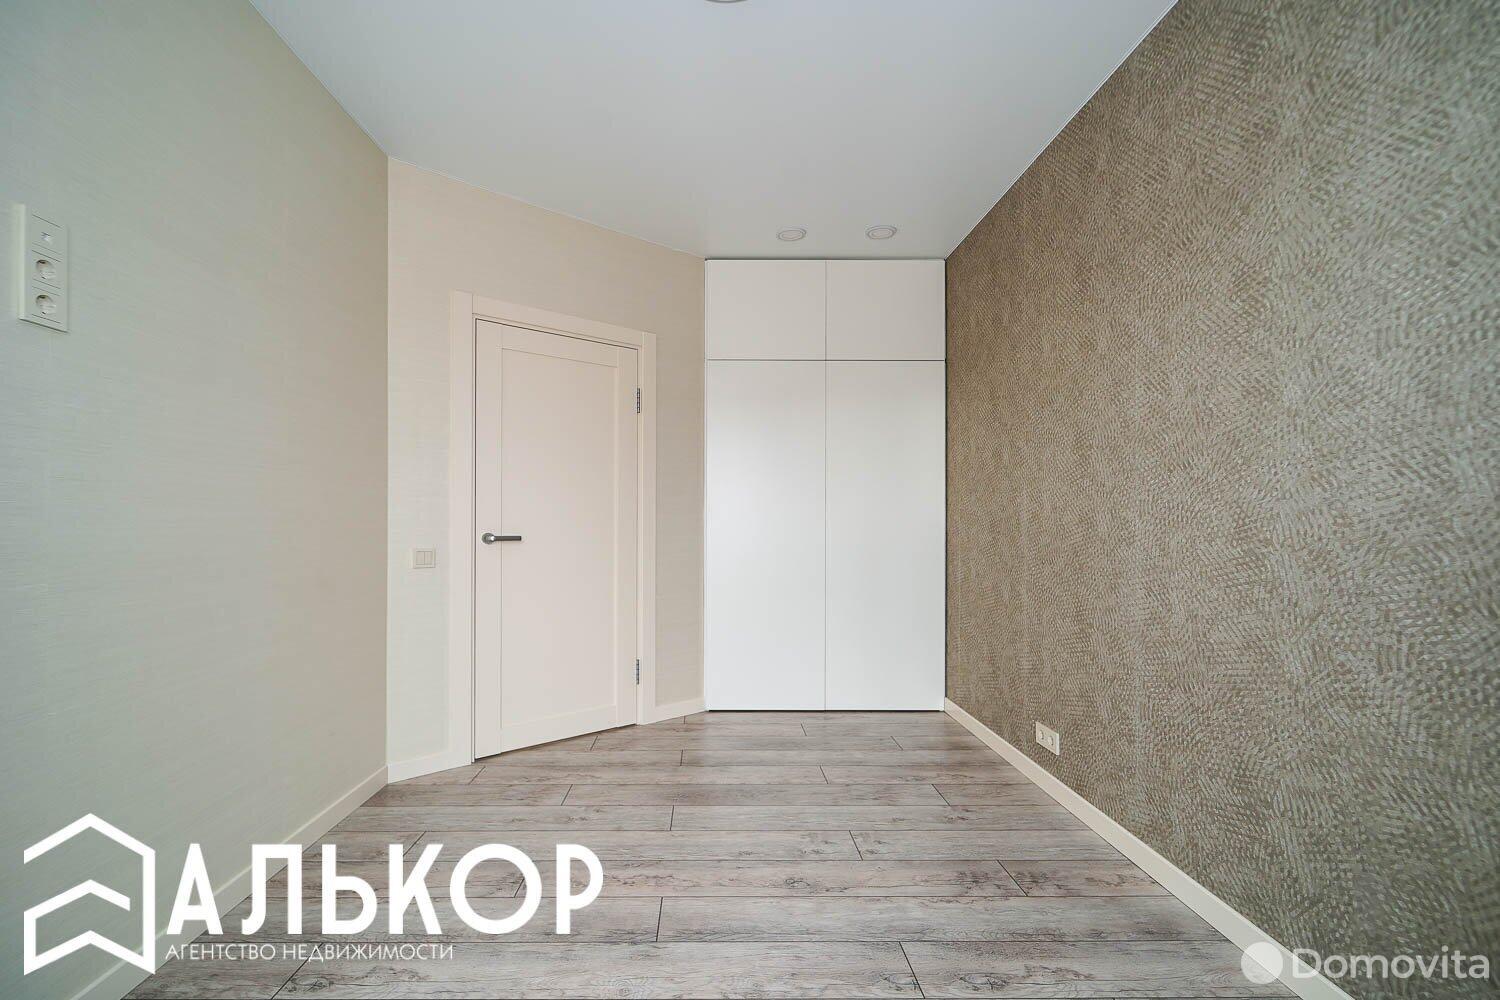 квартира, Минск, ул. Олешева, д. 5, стоимость продажи 272 765 р.